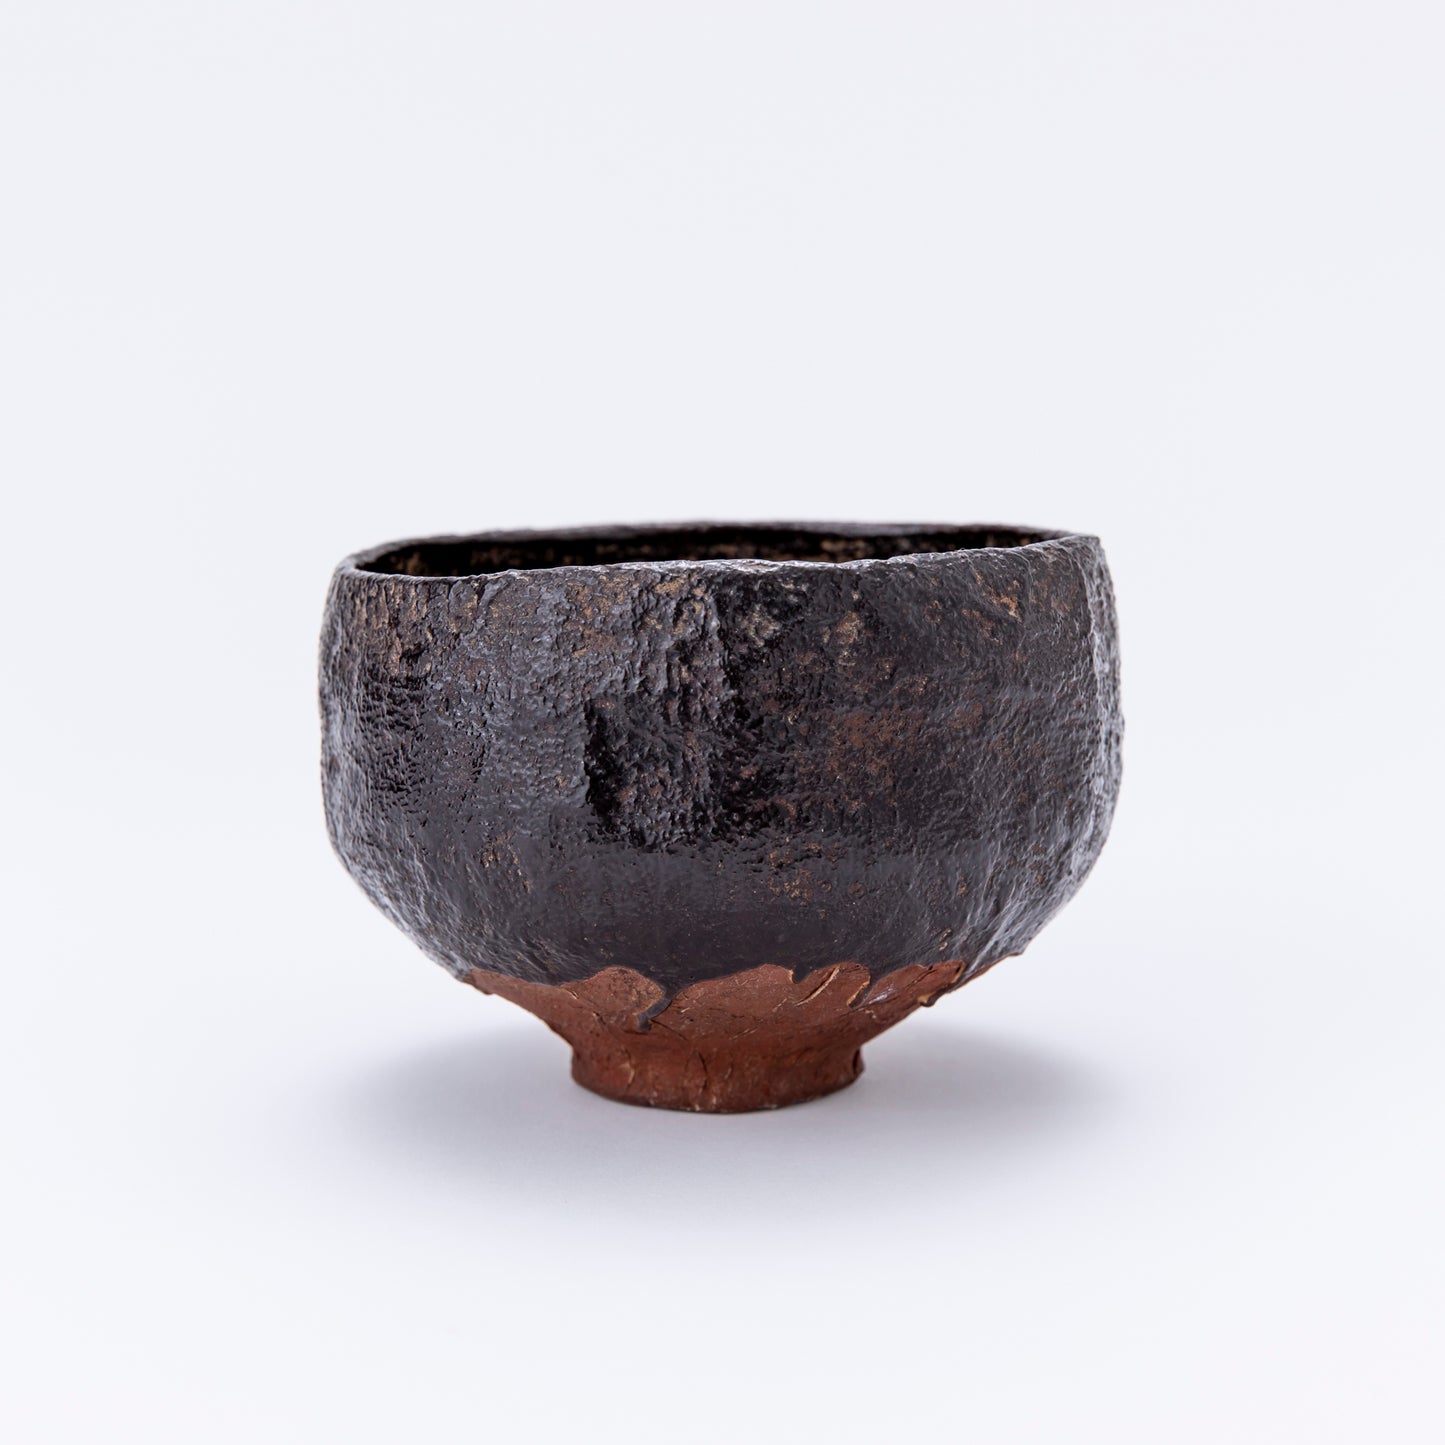 Ikkanbari tea bowl